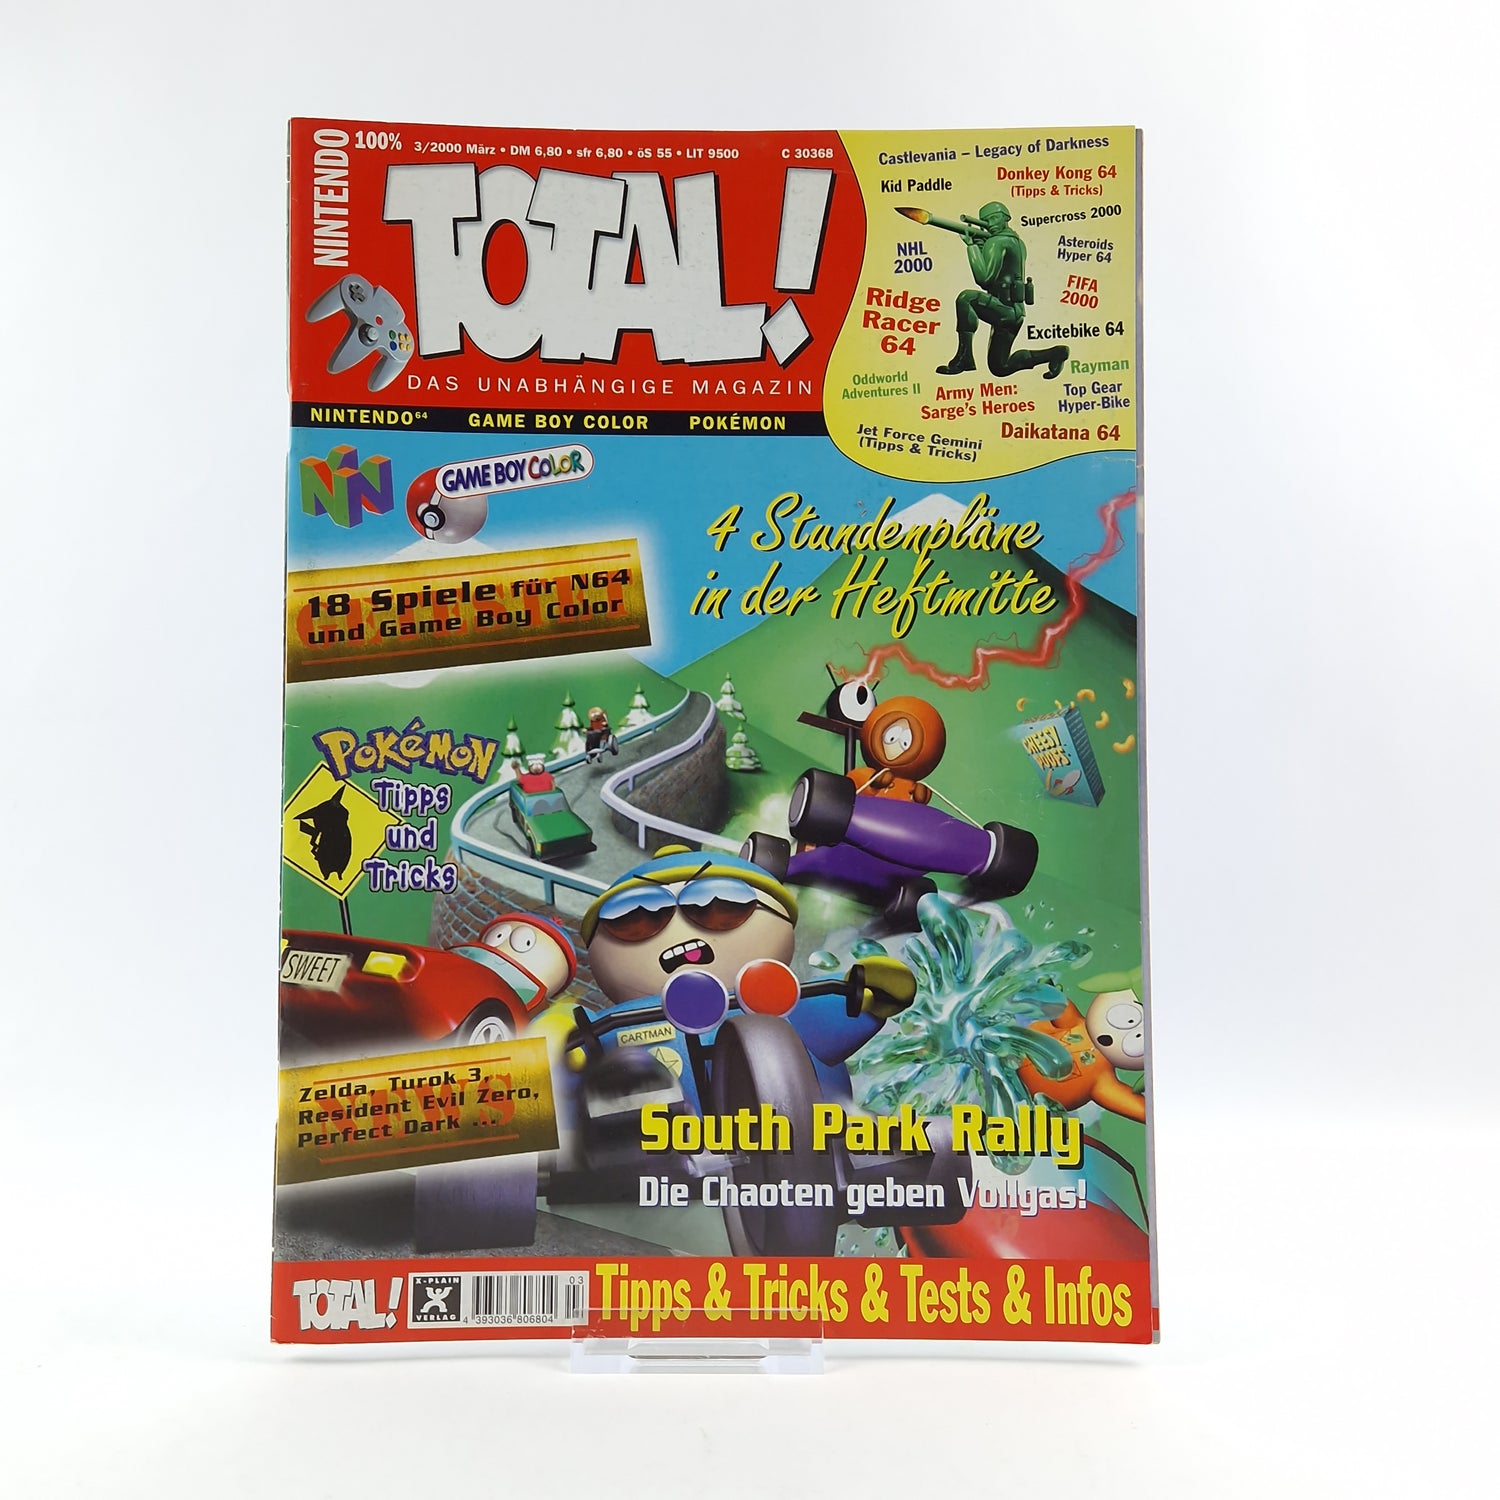 100% Nintendo TOTAL! Magazin : South Park Rally März 2000 - total Zeitschrift